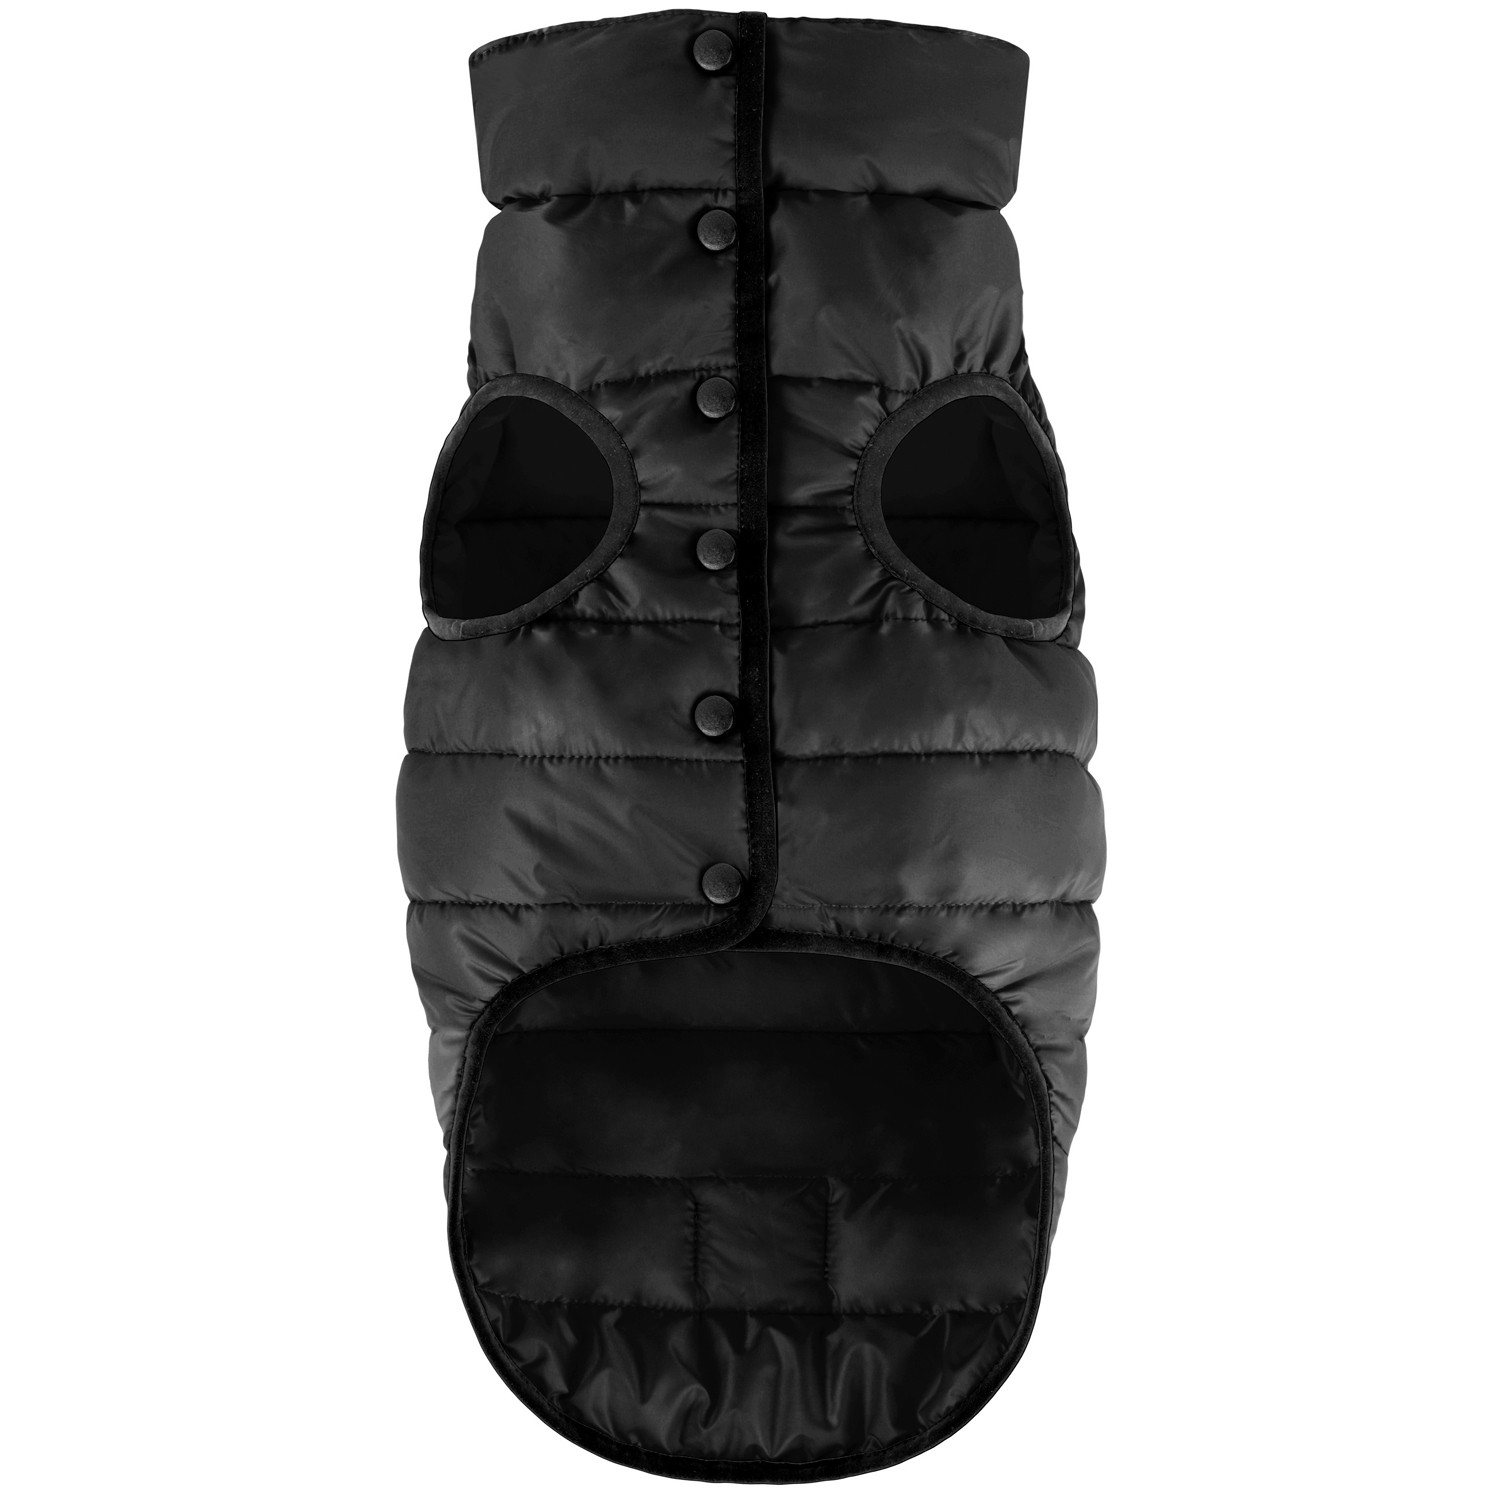 Курточка односторонняя для собак черная Airyvest one р.xs 30см